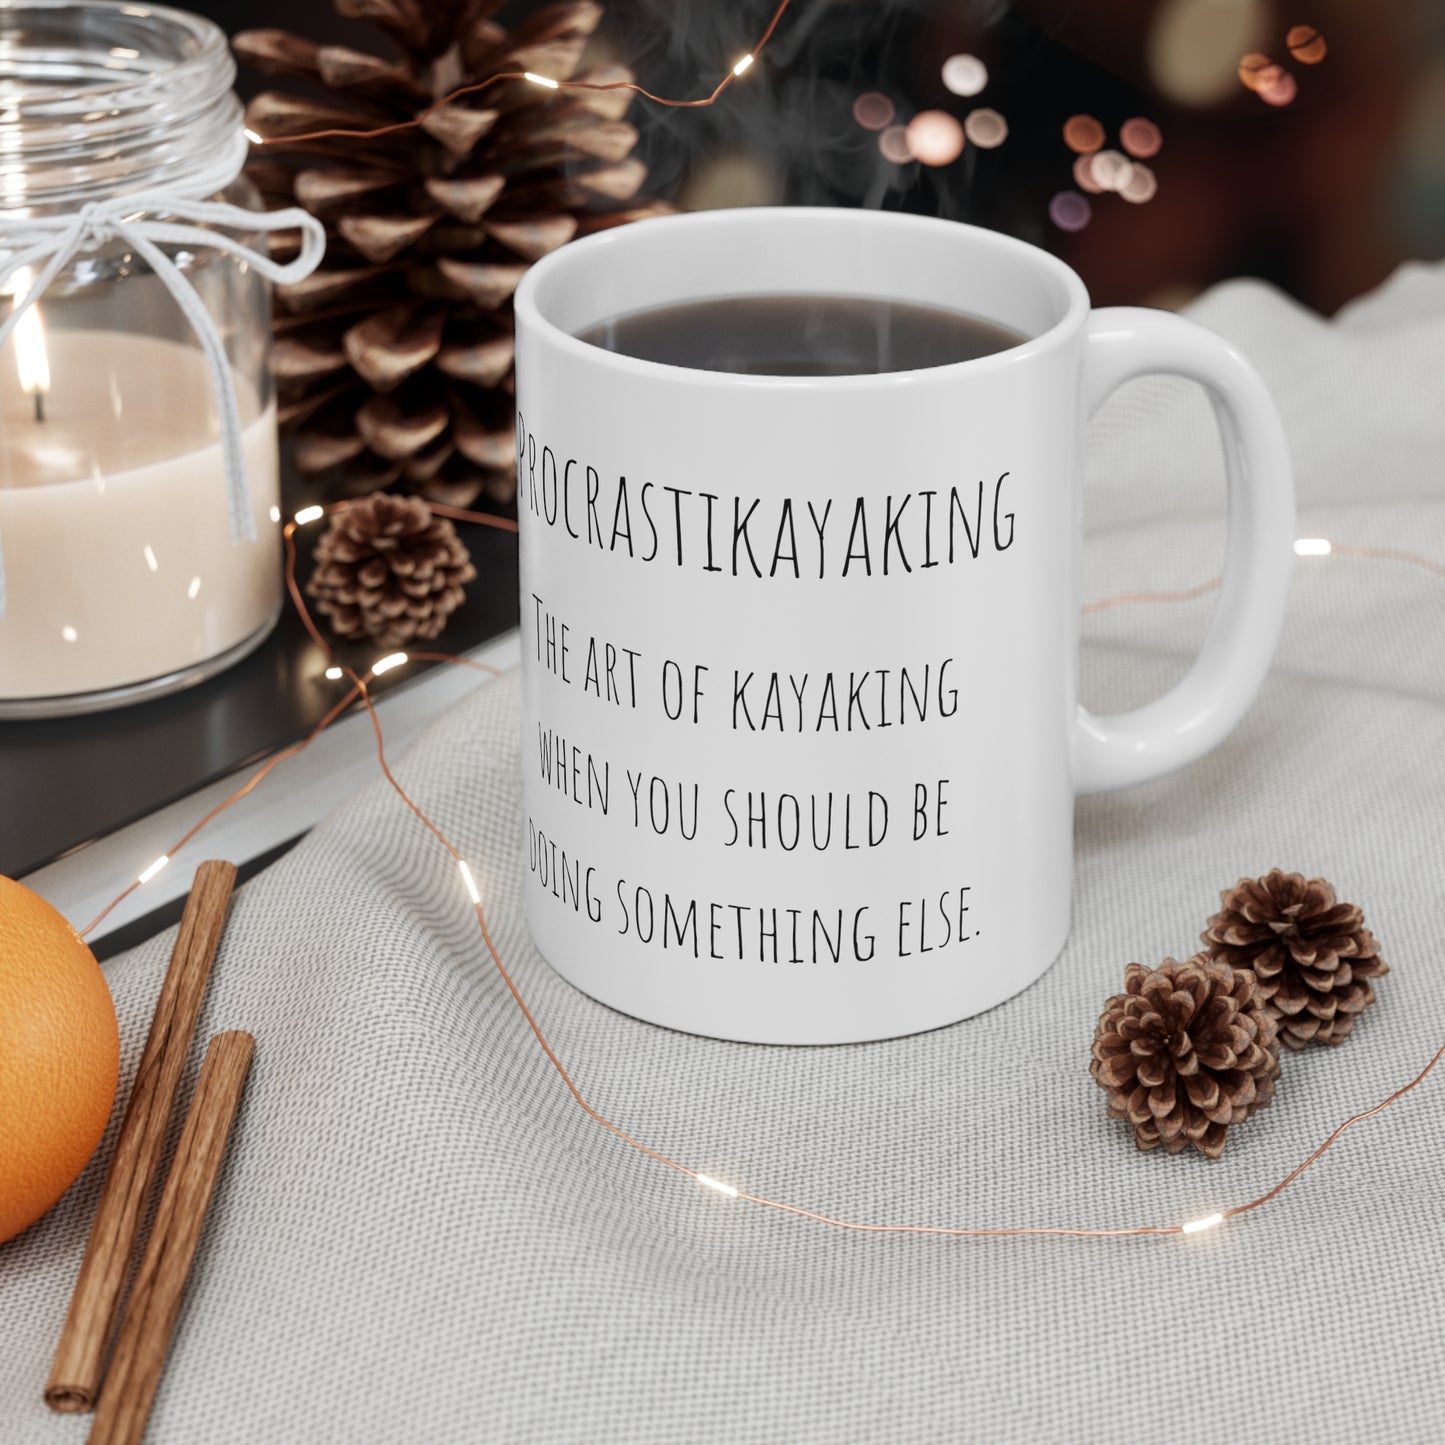 Funny Kayak Mug Procrastikayaking When You Should Be Doing Something Else Coffee Mug Kayaker Gift